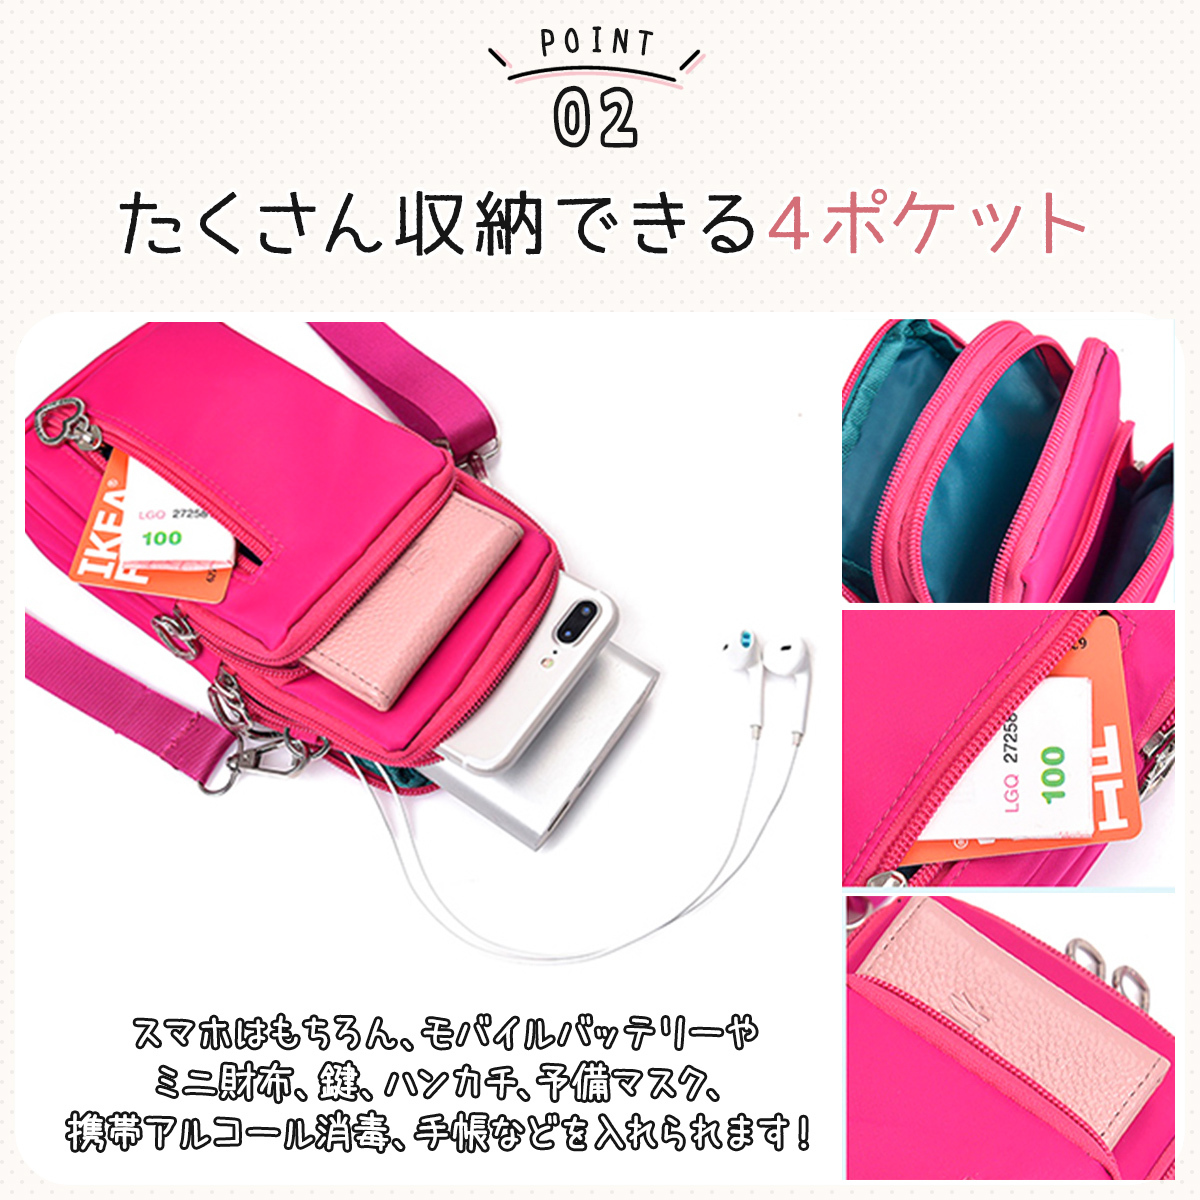  смартфон сумка смартфон небольшая сумочка смартфон сумка на плечо сумка женский смартфон сумка 